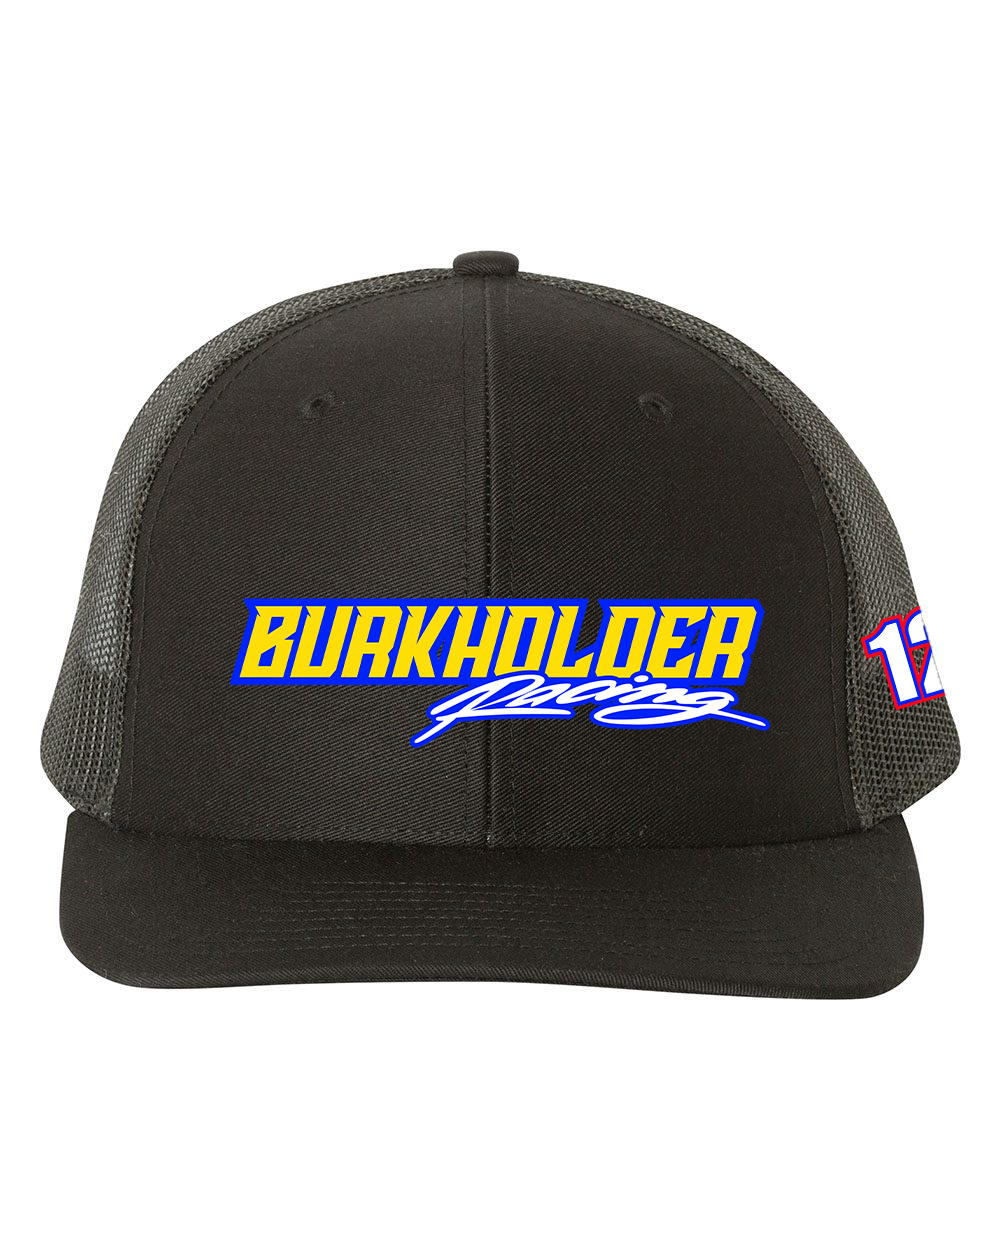 Burkholder Racing Hats Black Acid Apparel